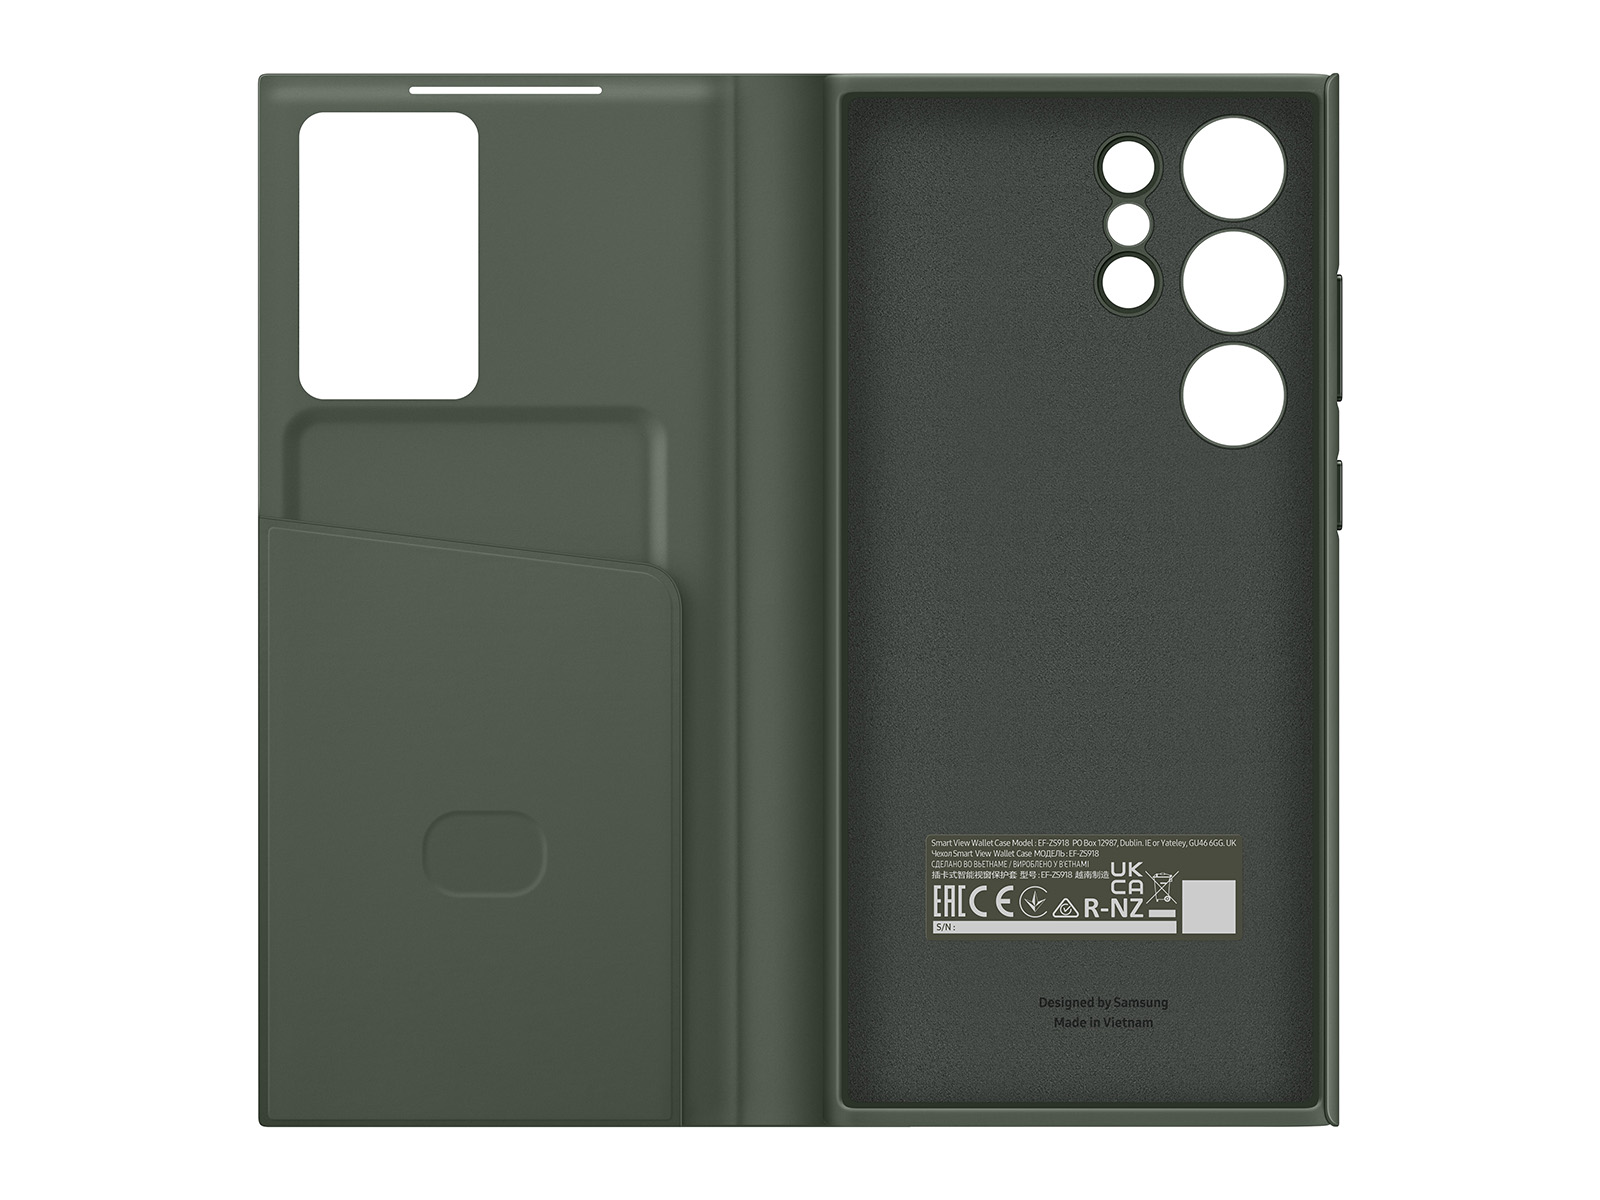 phone wallet case